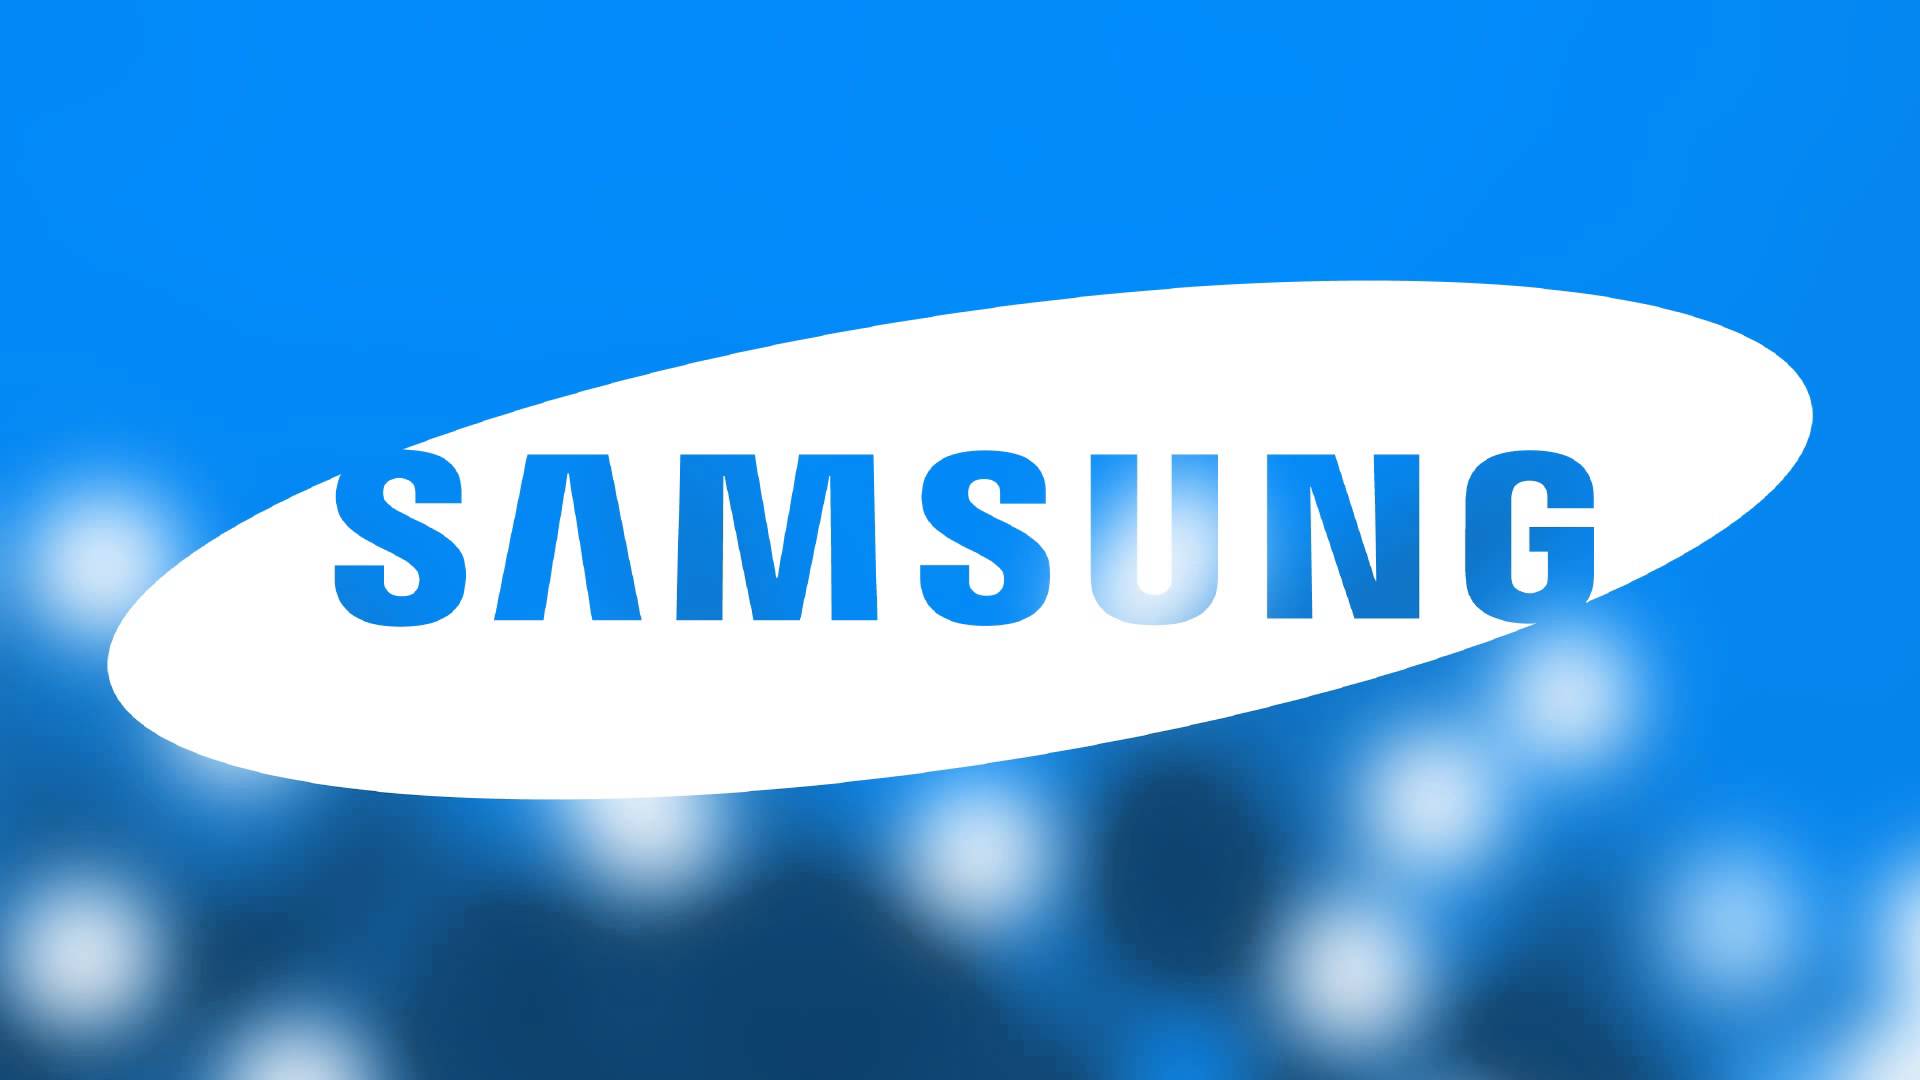 Samsung Boot Up Logo - Ready-to-assemble homes provider wins Samsung start-up award ...